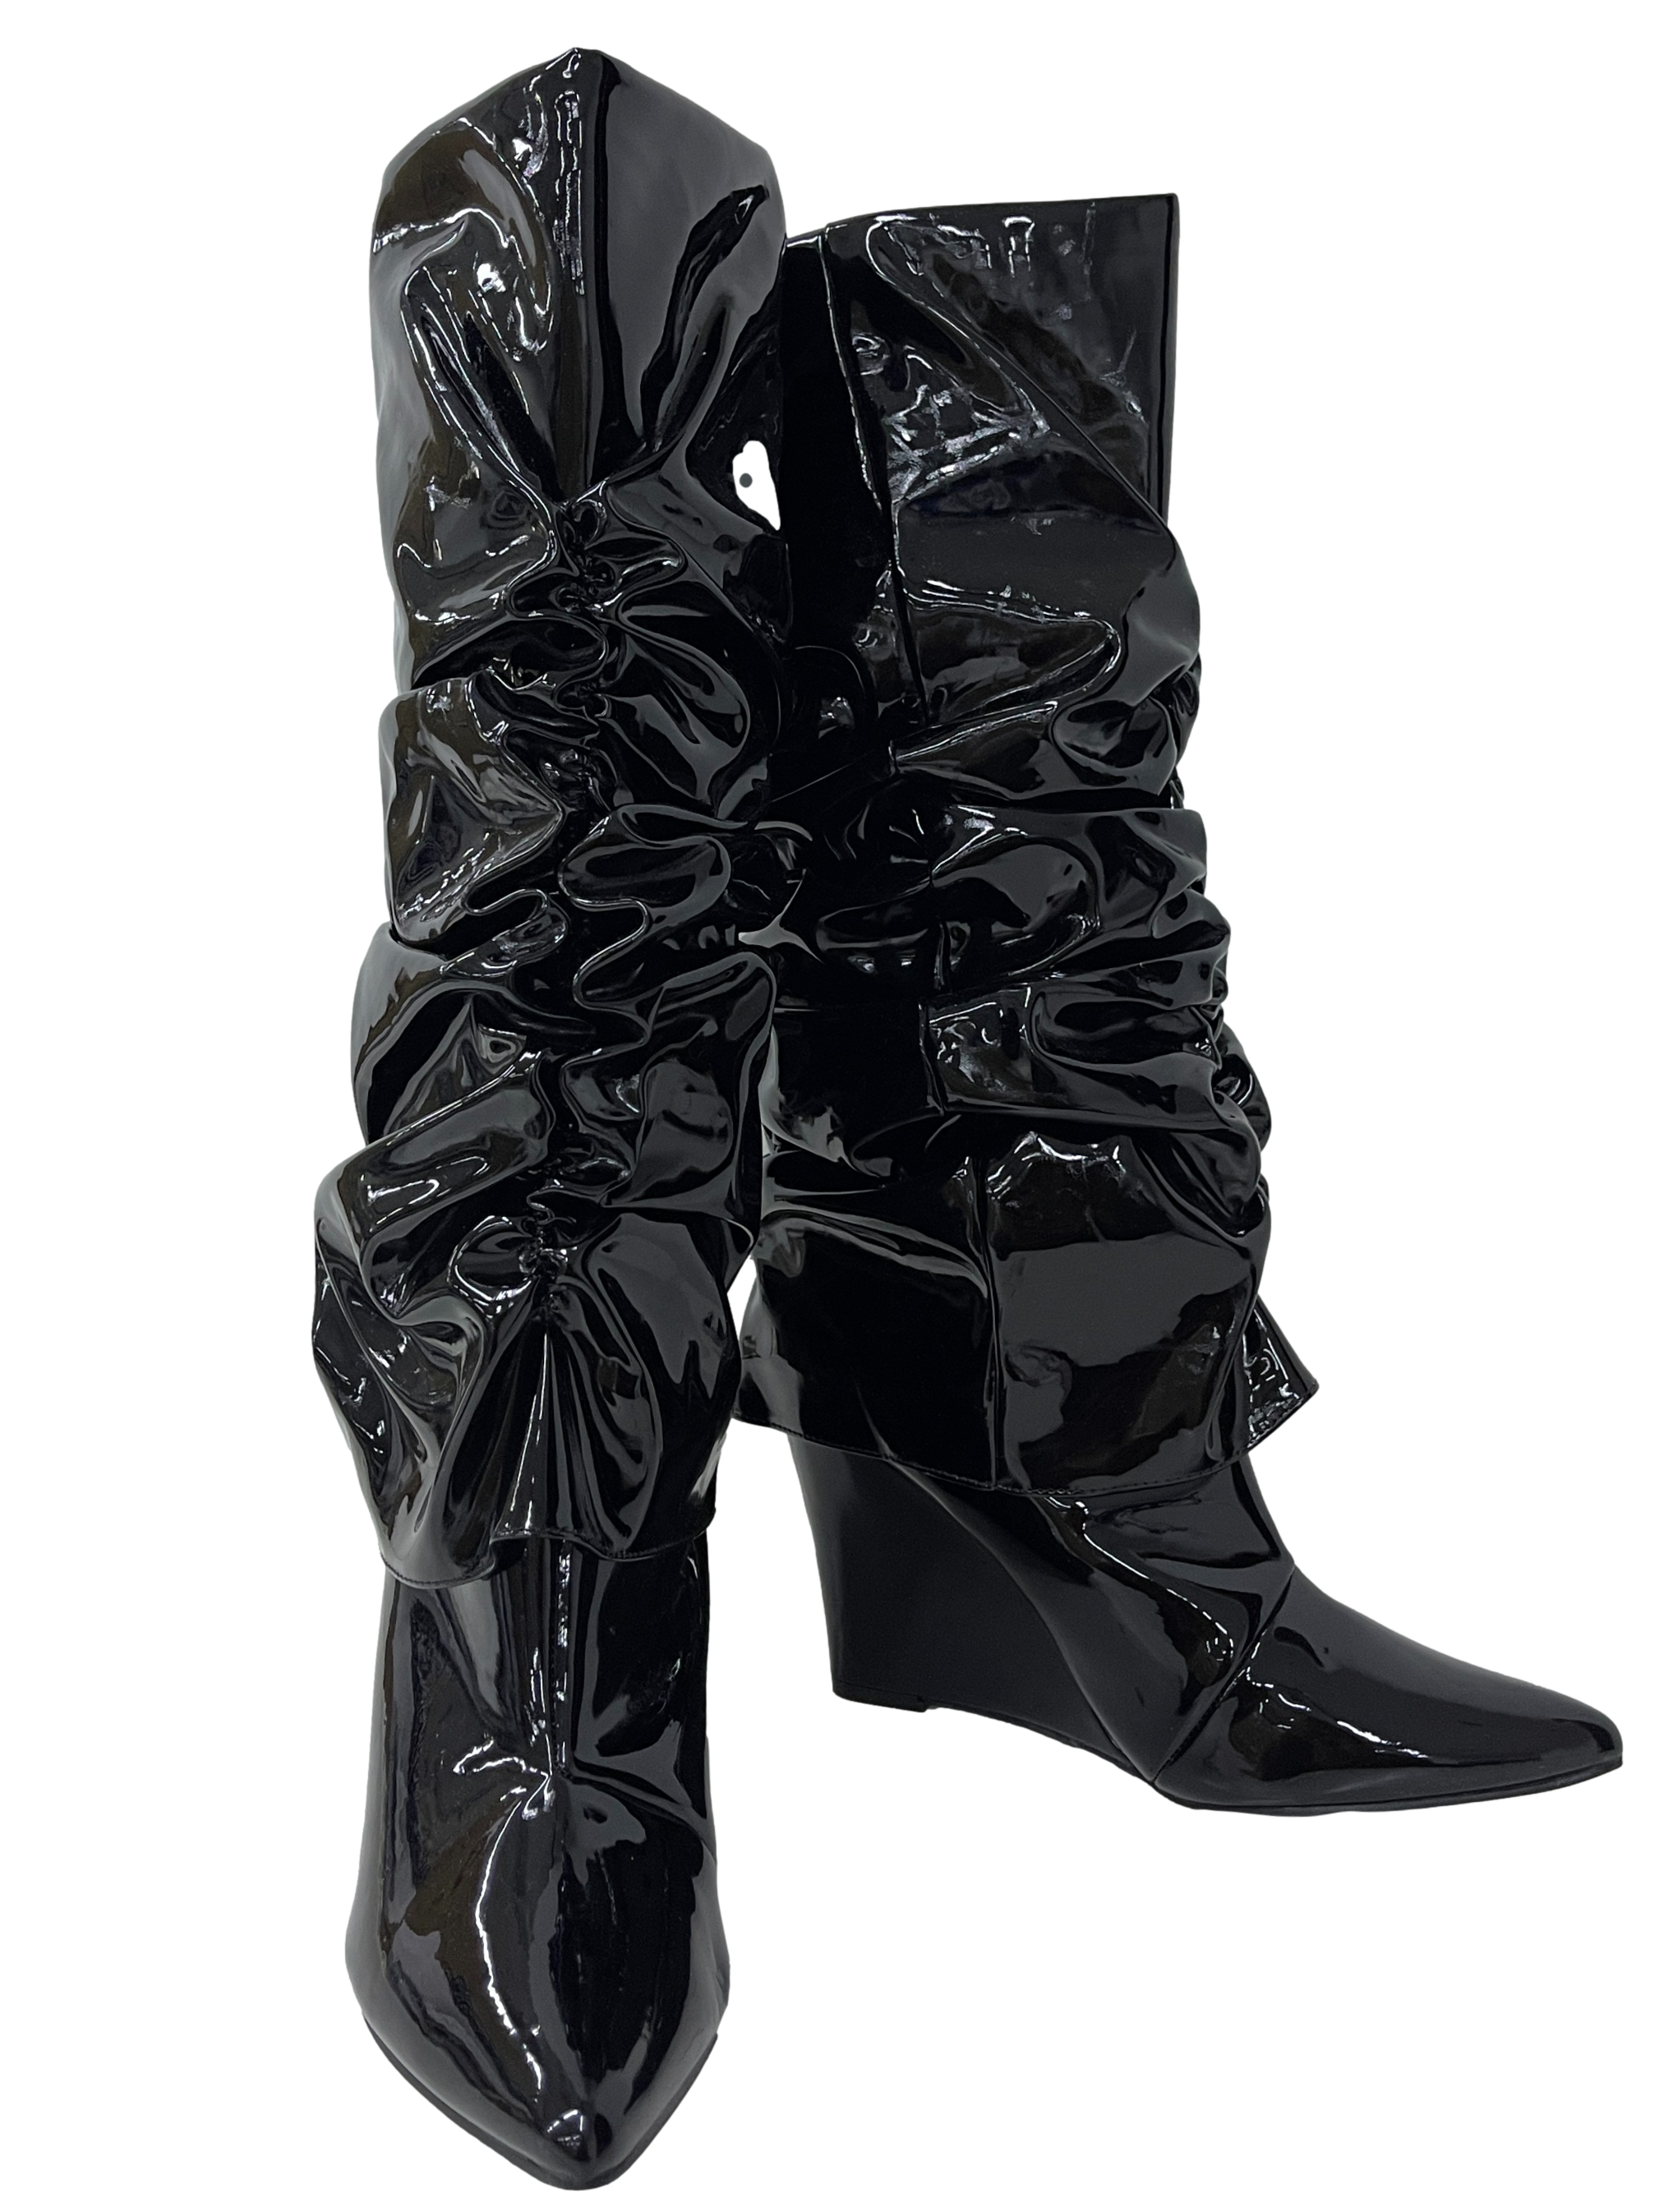 Black Shiny Wedges Boots